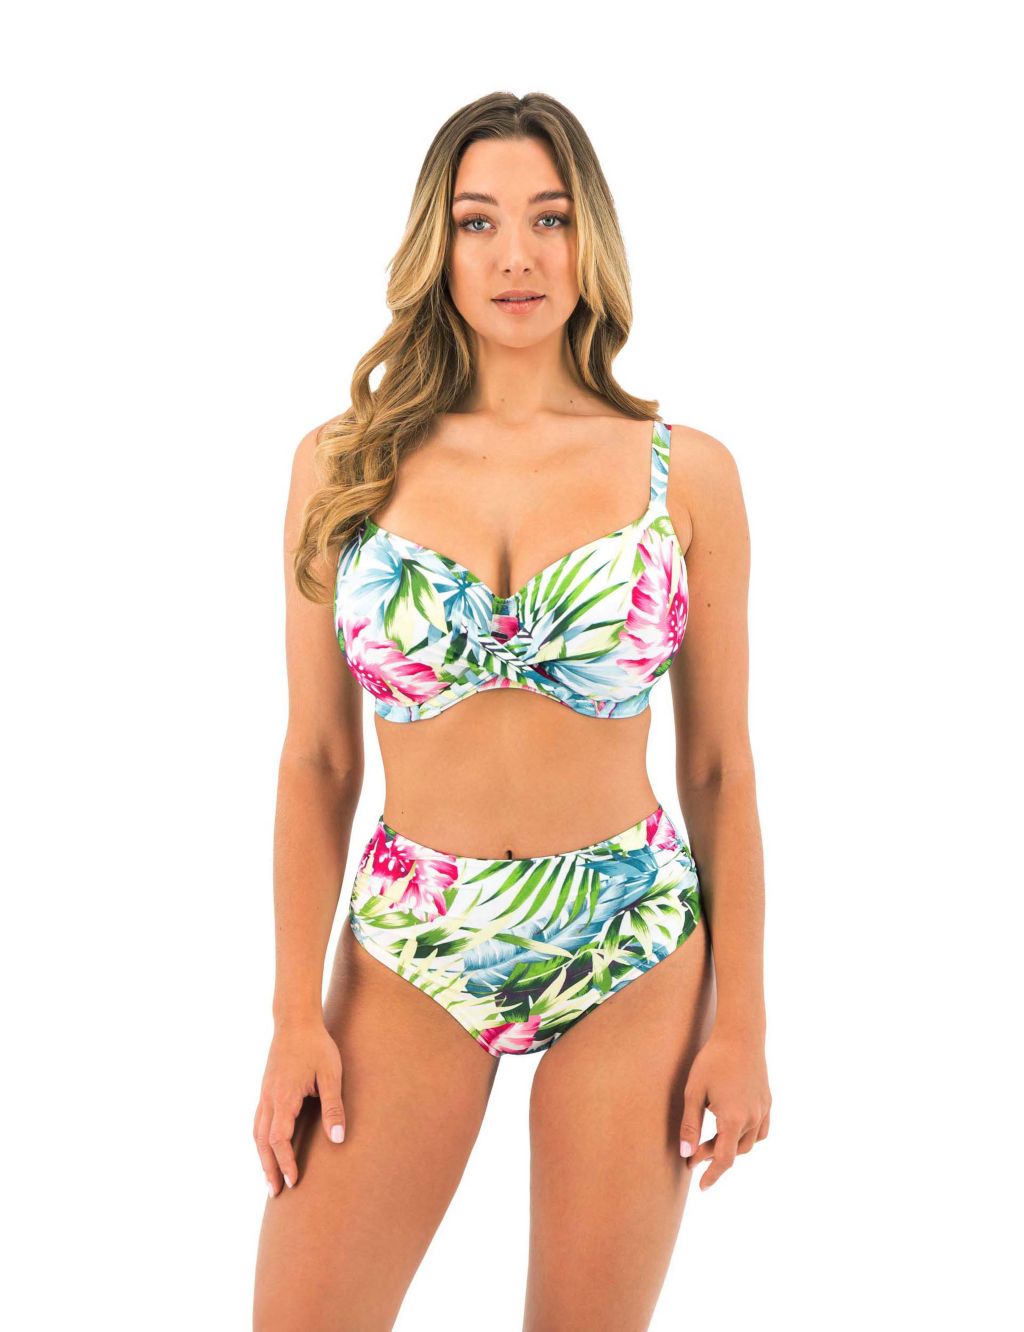 Langkawi Tropical Wired Bikini Top image 4